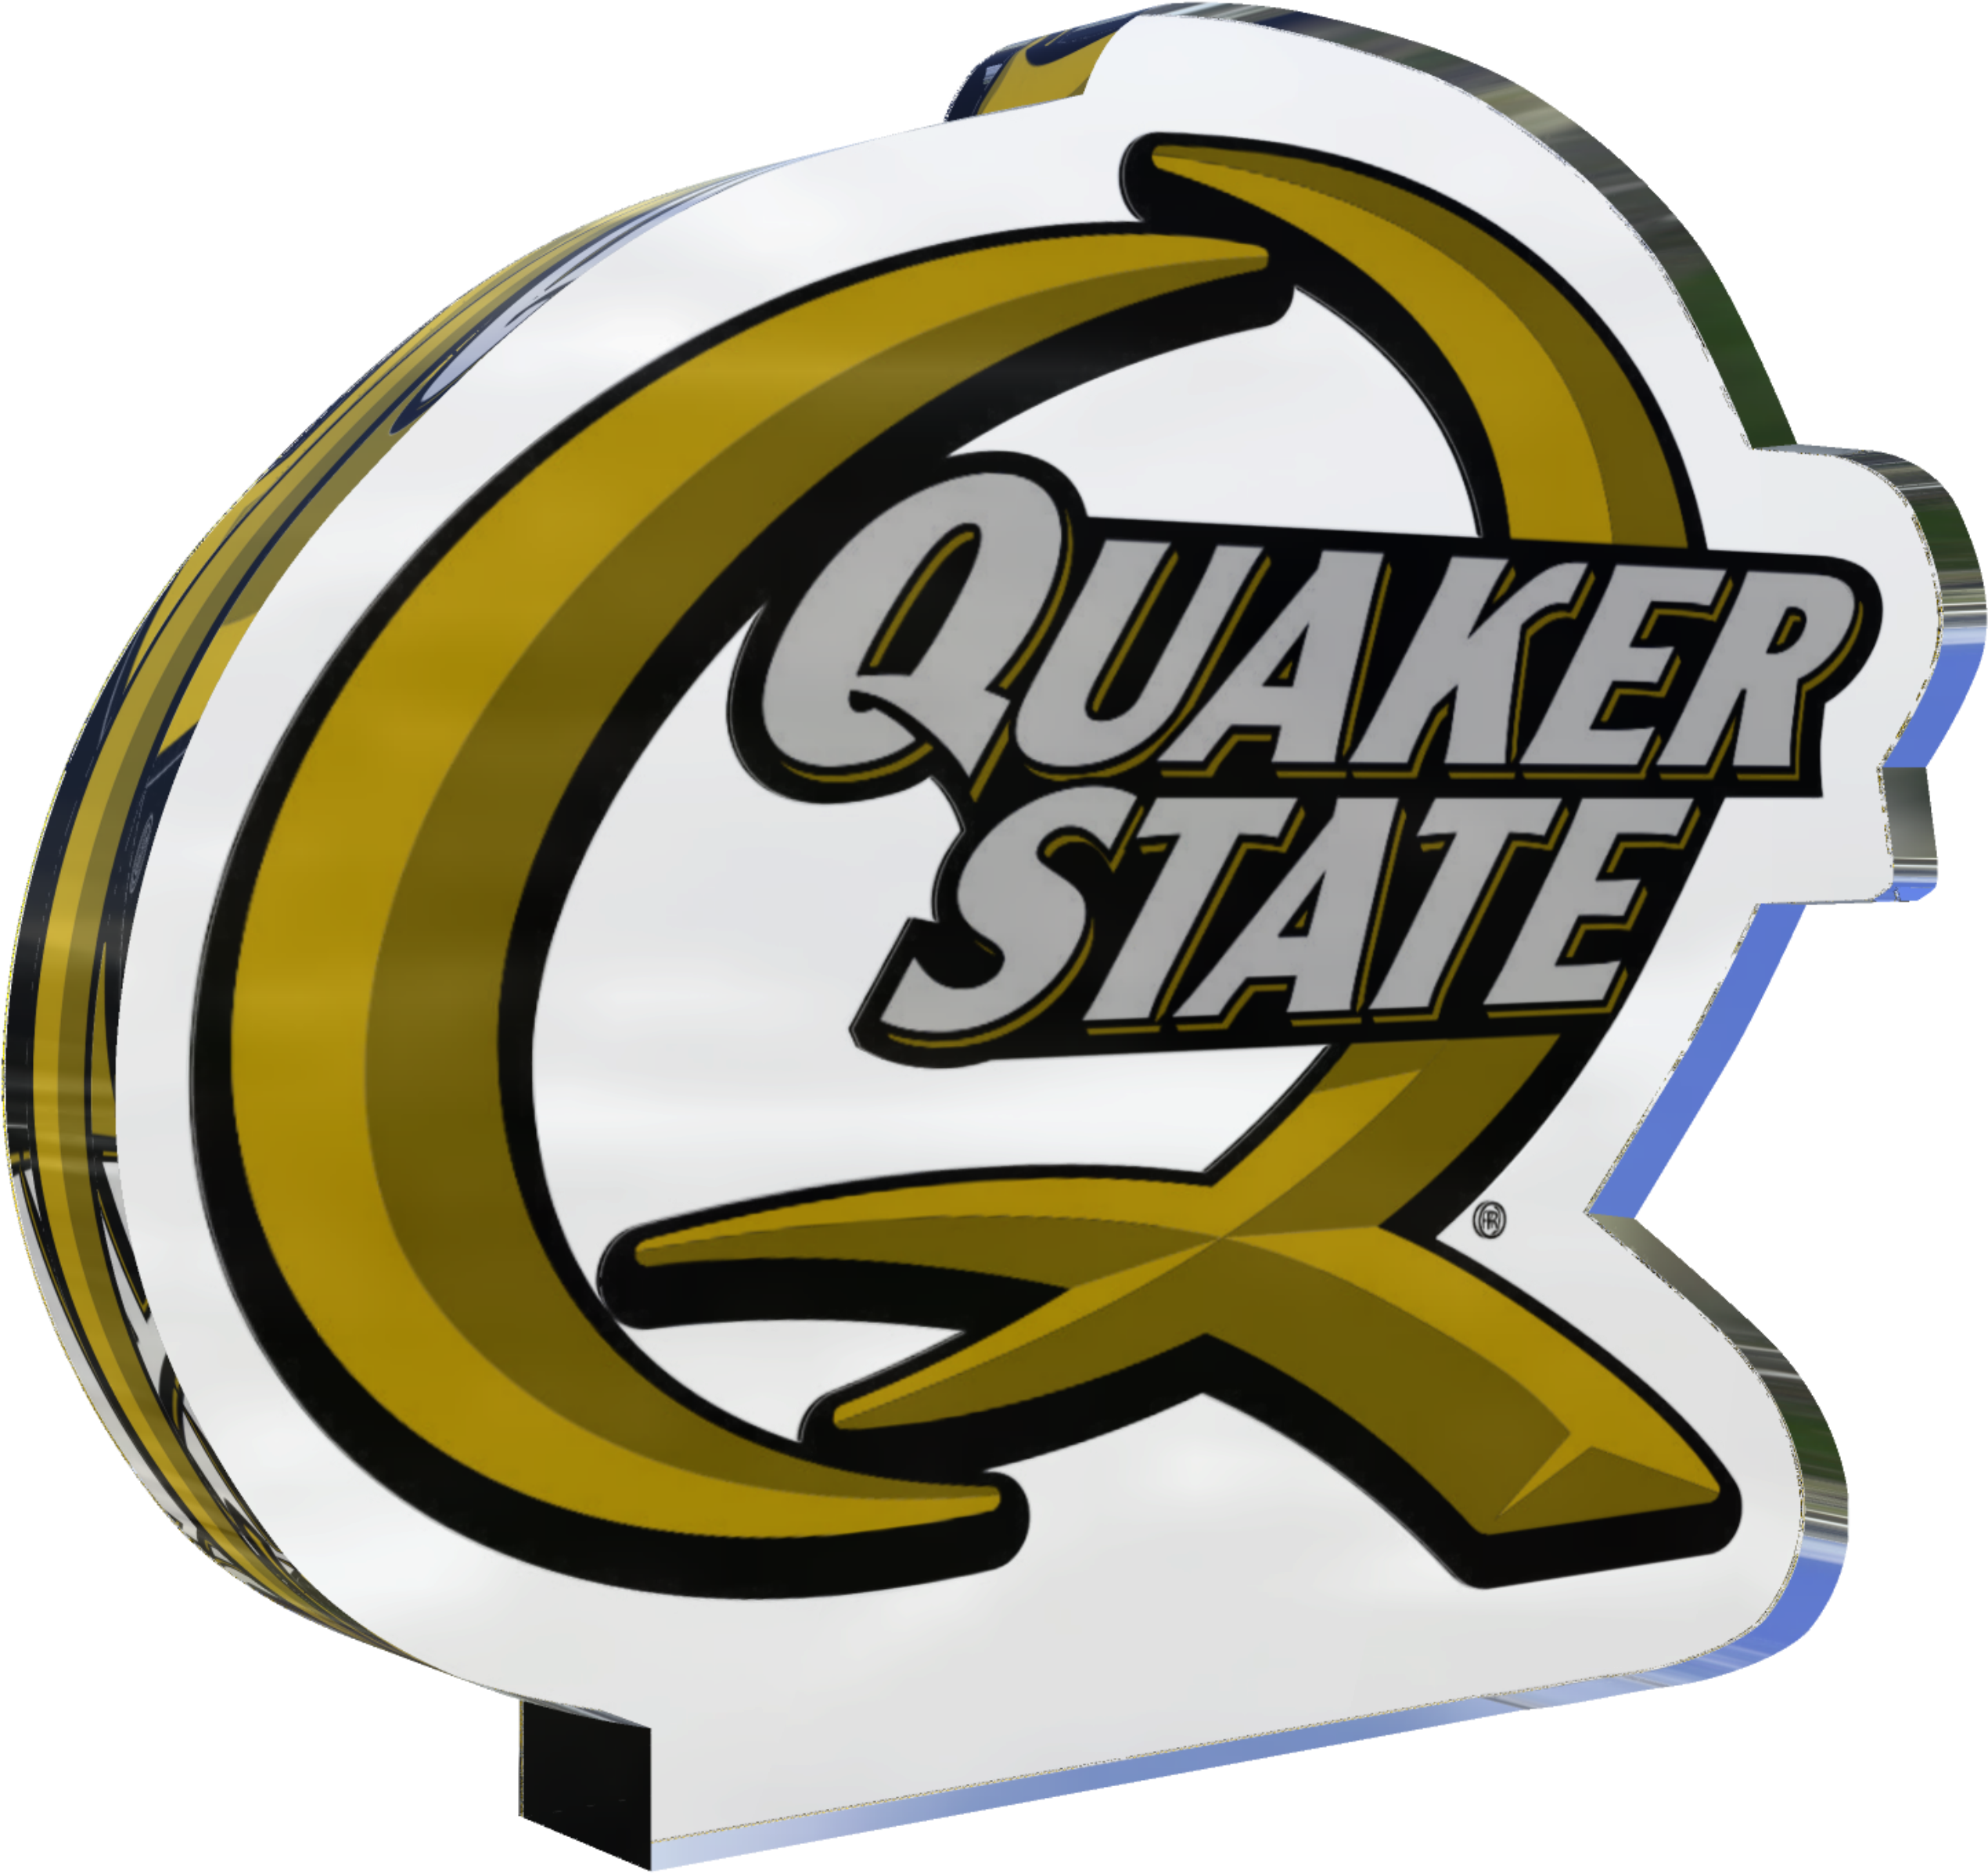 HD Quaker State Transparent PNG Image Download.